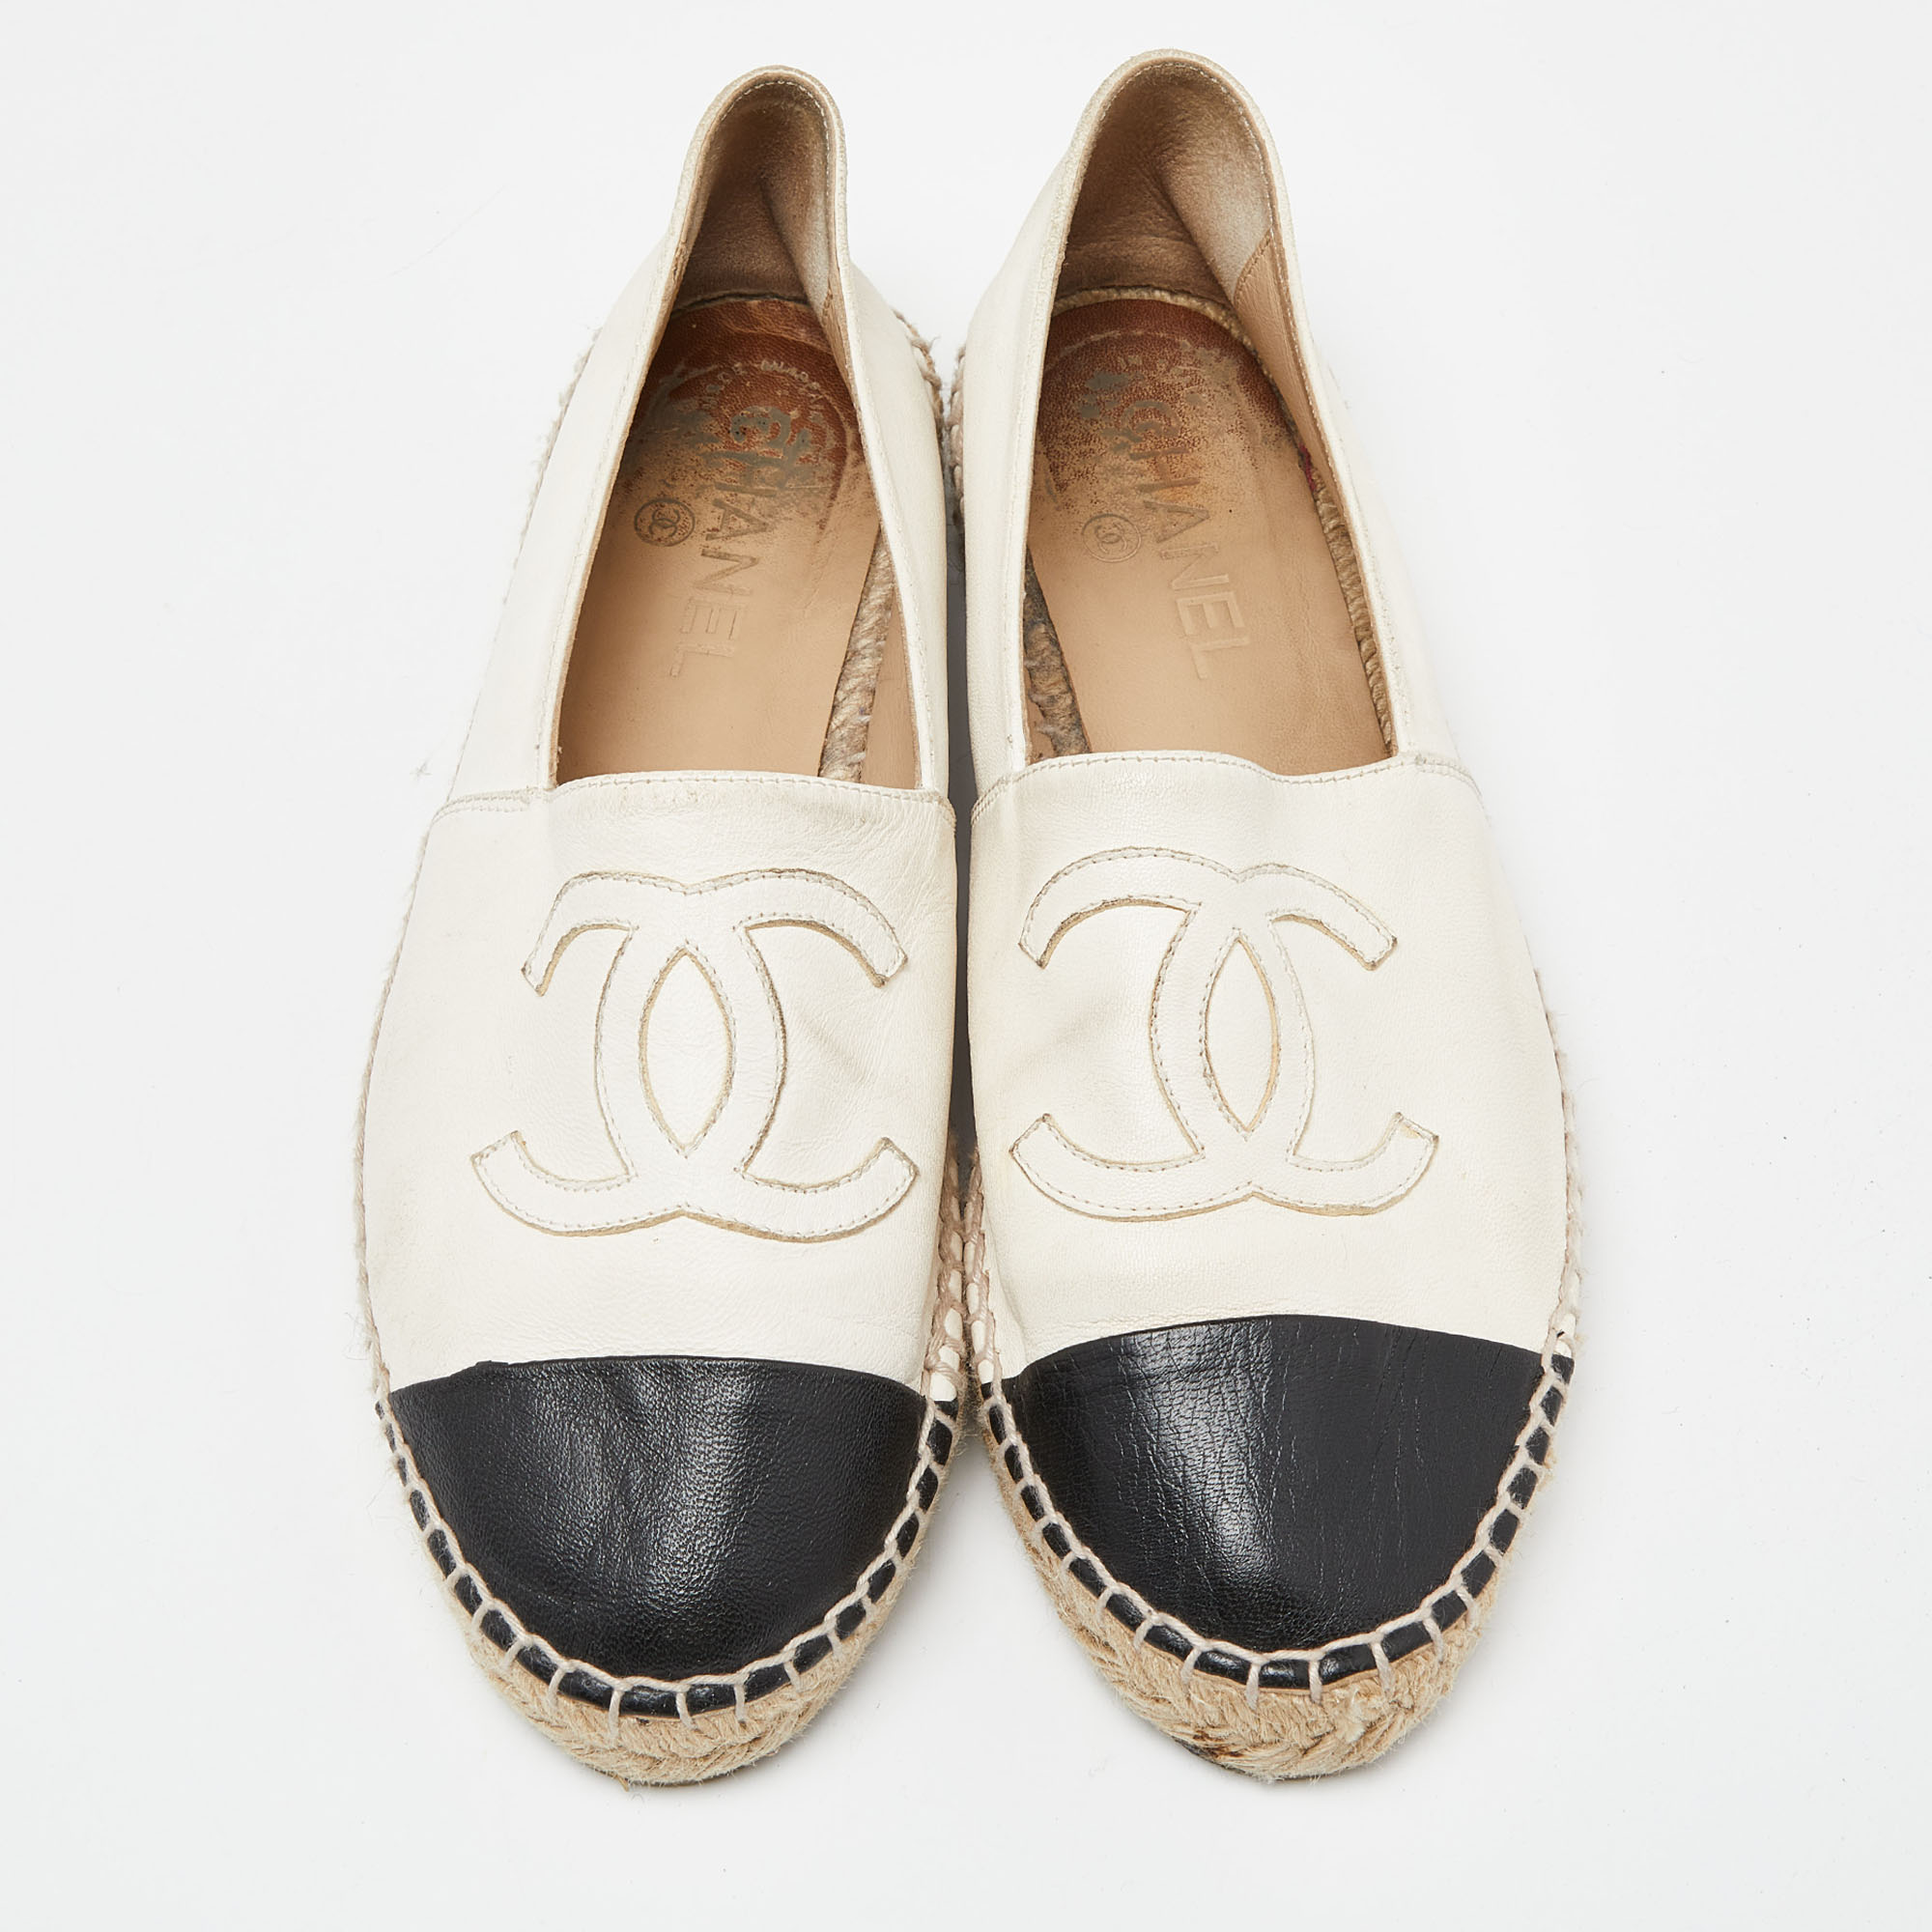 Chanel Off White/Black Leather CC Espadrille Flats Size 38